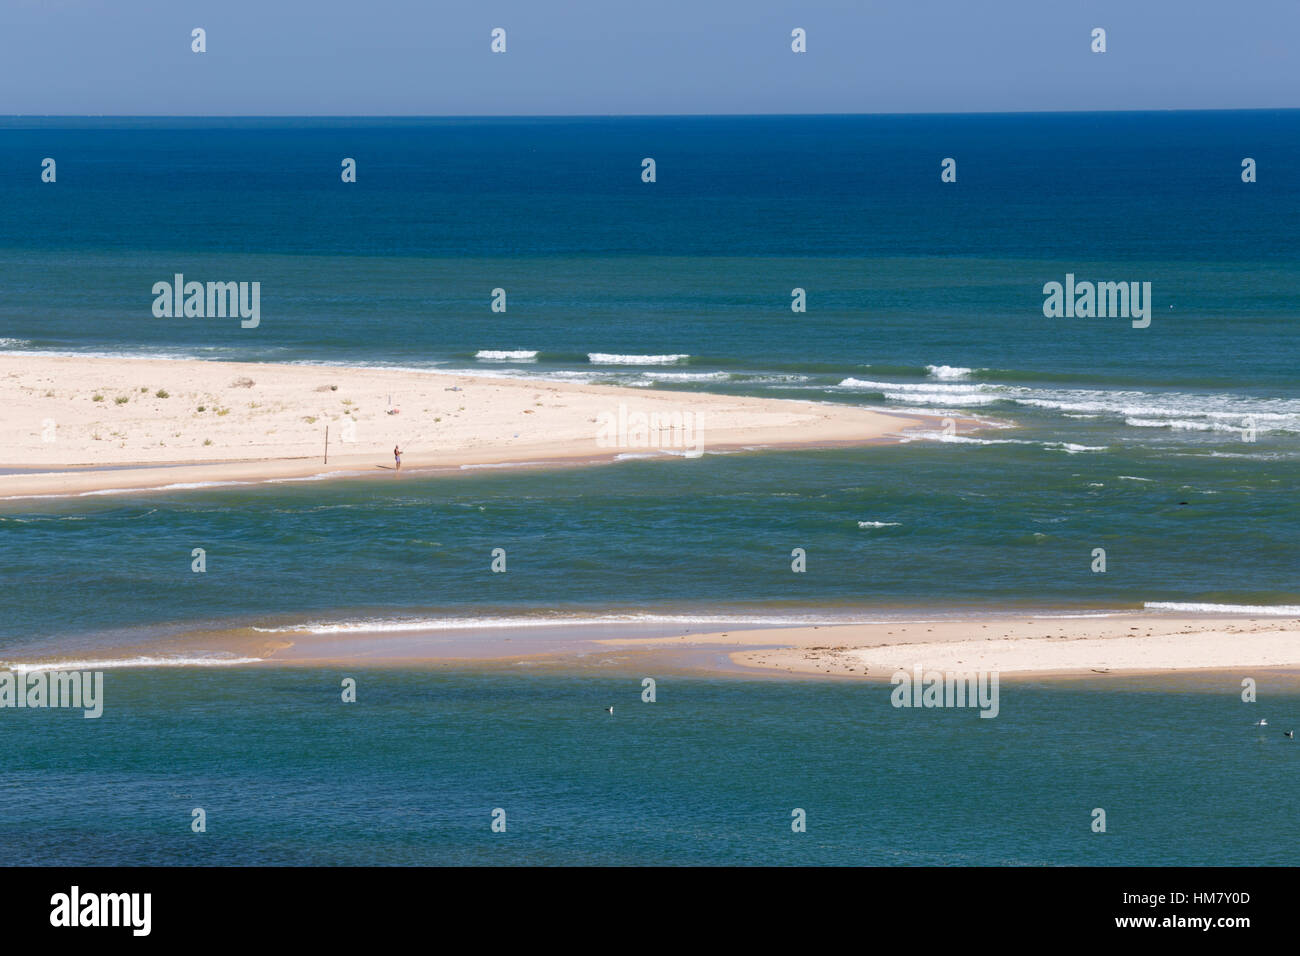 Praia de Cacela Velha beach on barrier island, Cacela Velha, Algarve, Portugal, Europe Stock Photo